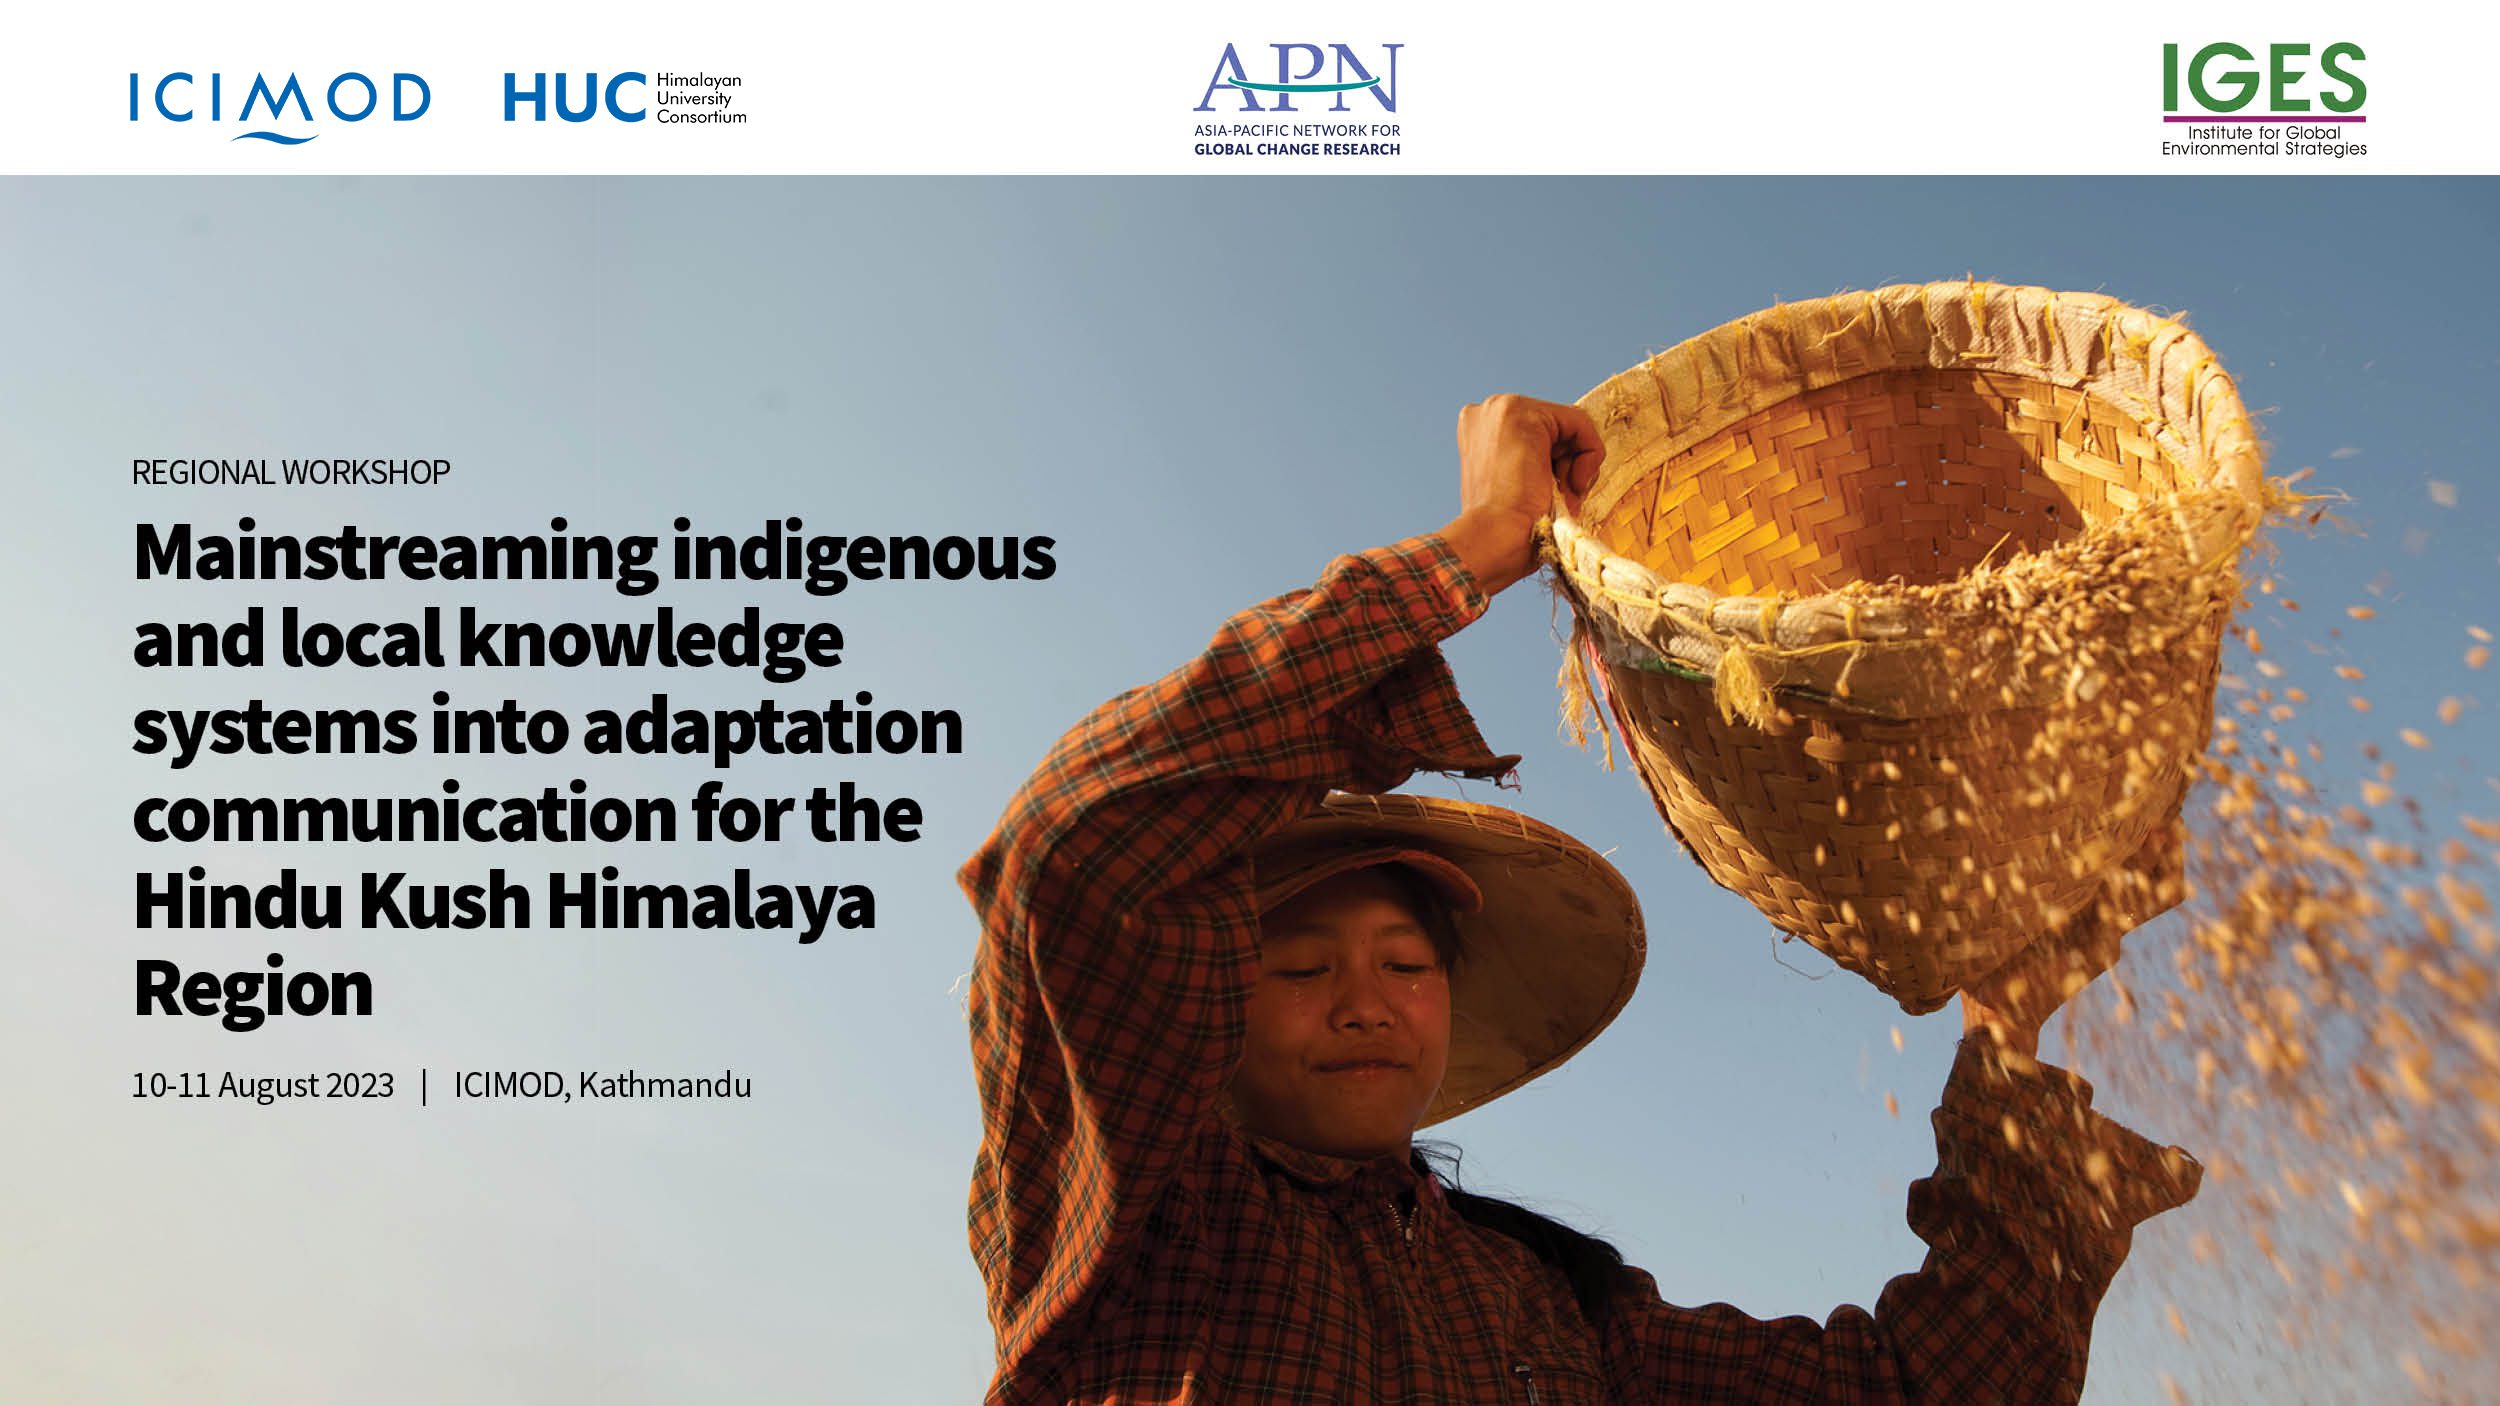 Mainstreaming indigenous and local knowledge systems into adaptation communication for the Hindu Kush Himalaya Region